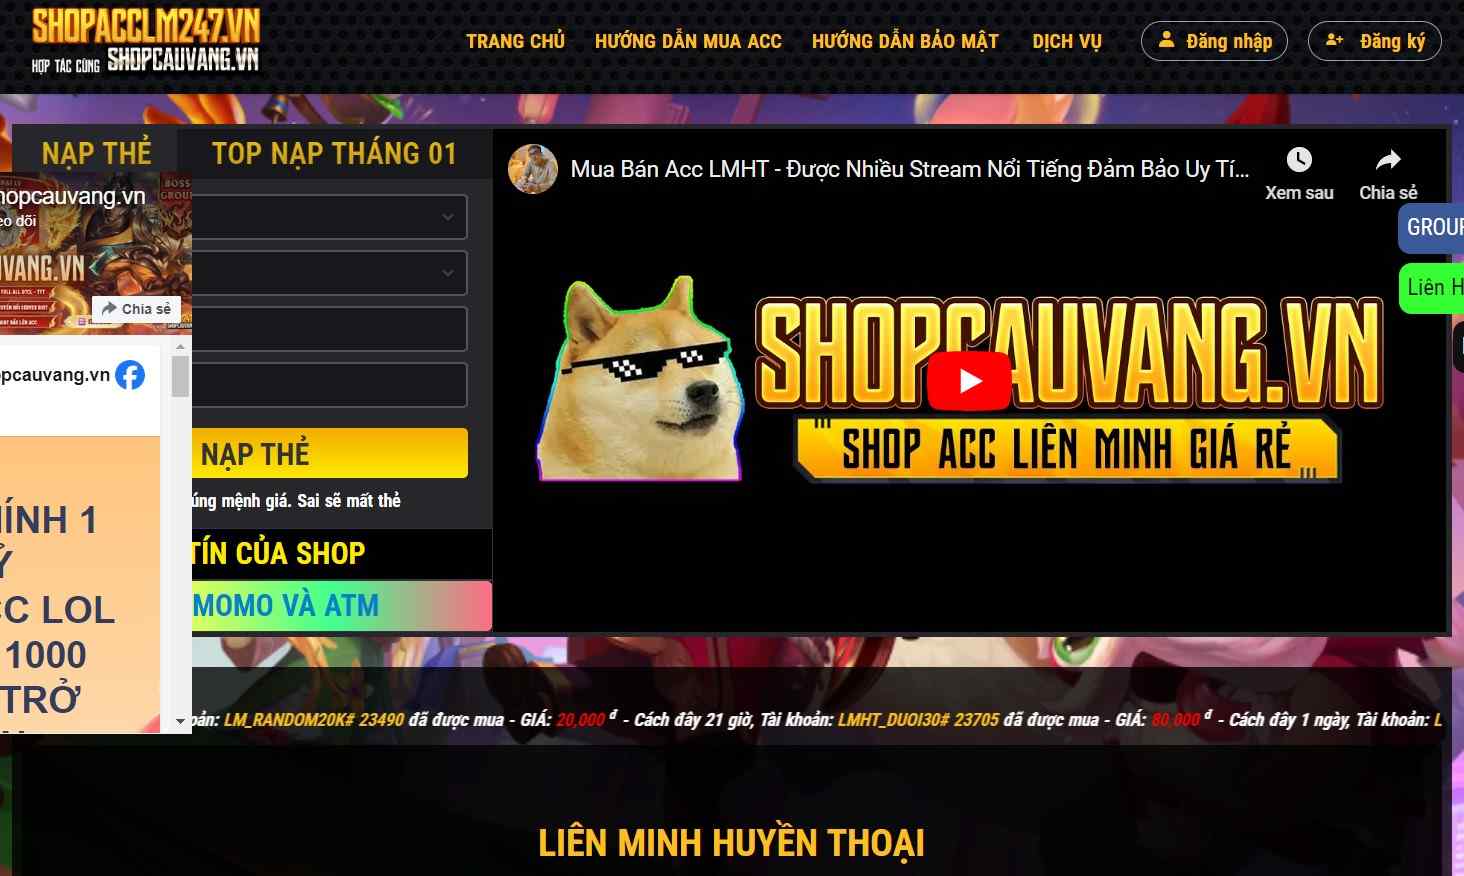 Shop Shopacclm247.vn